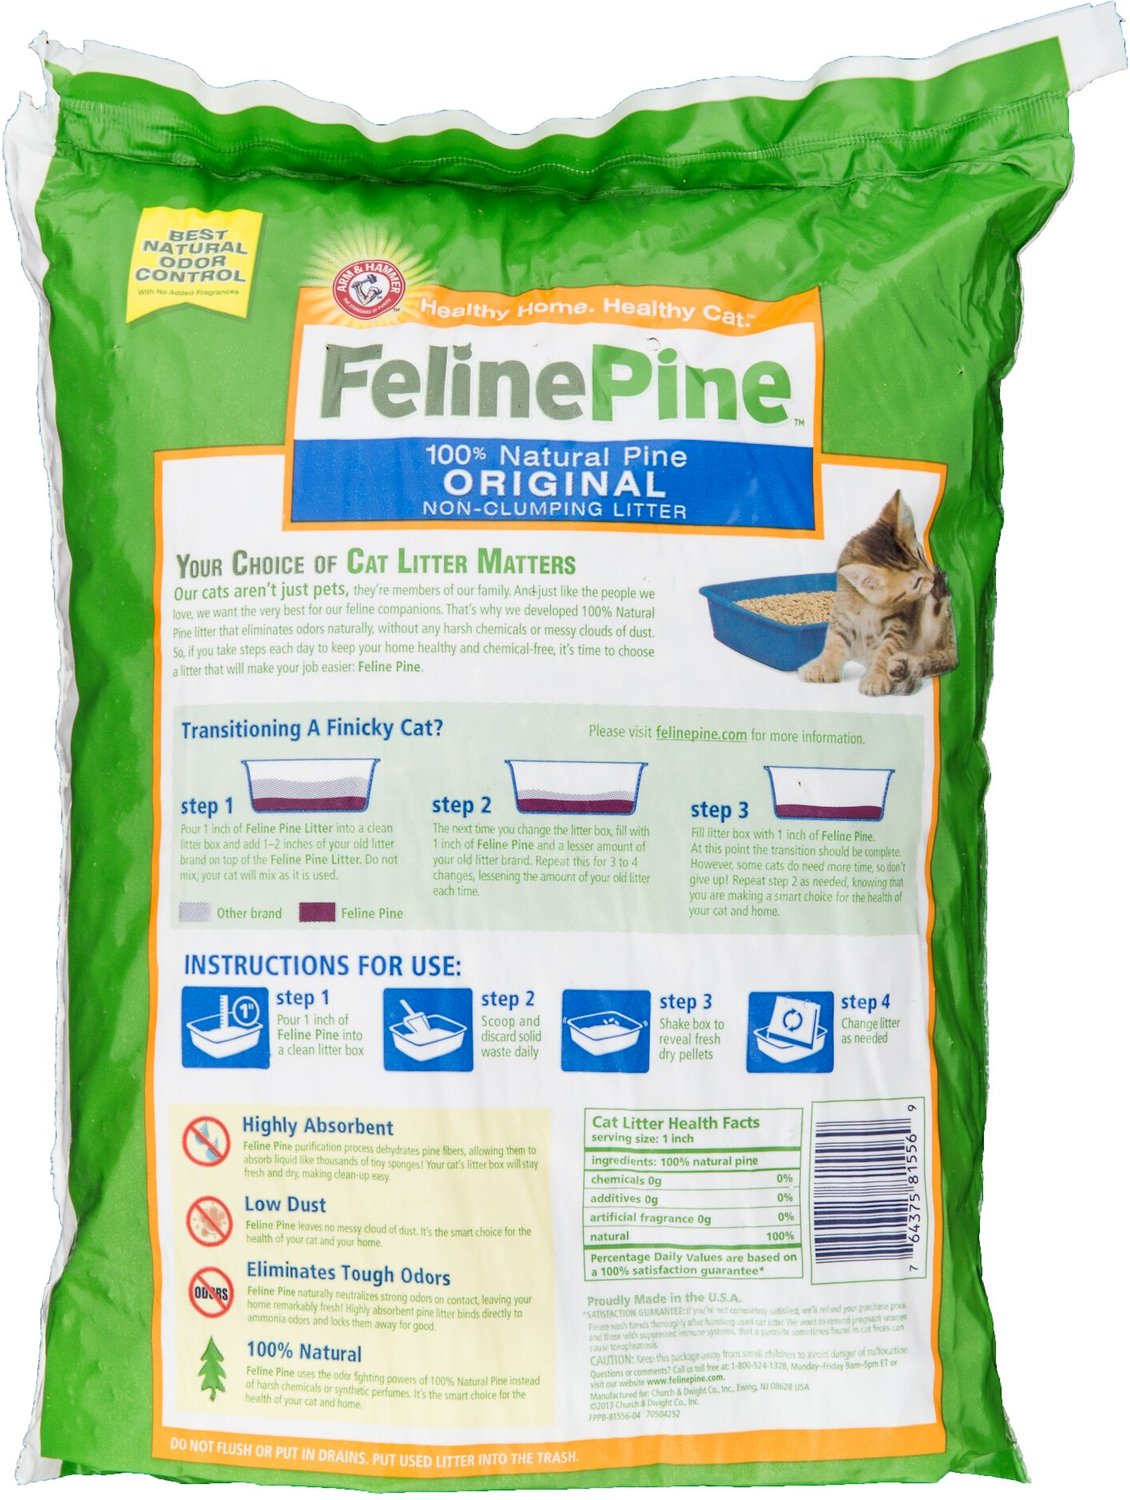 Feline Pine Original Cat Litter, 7lb bag